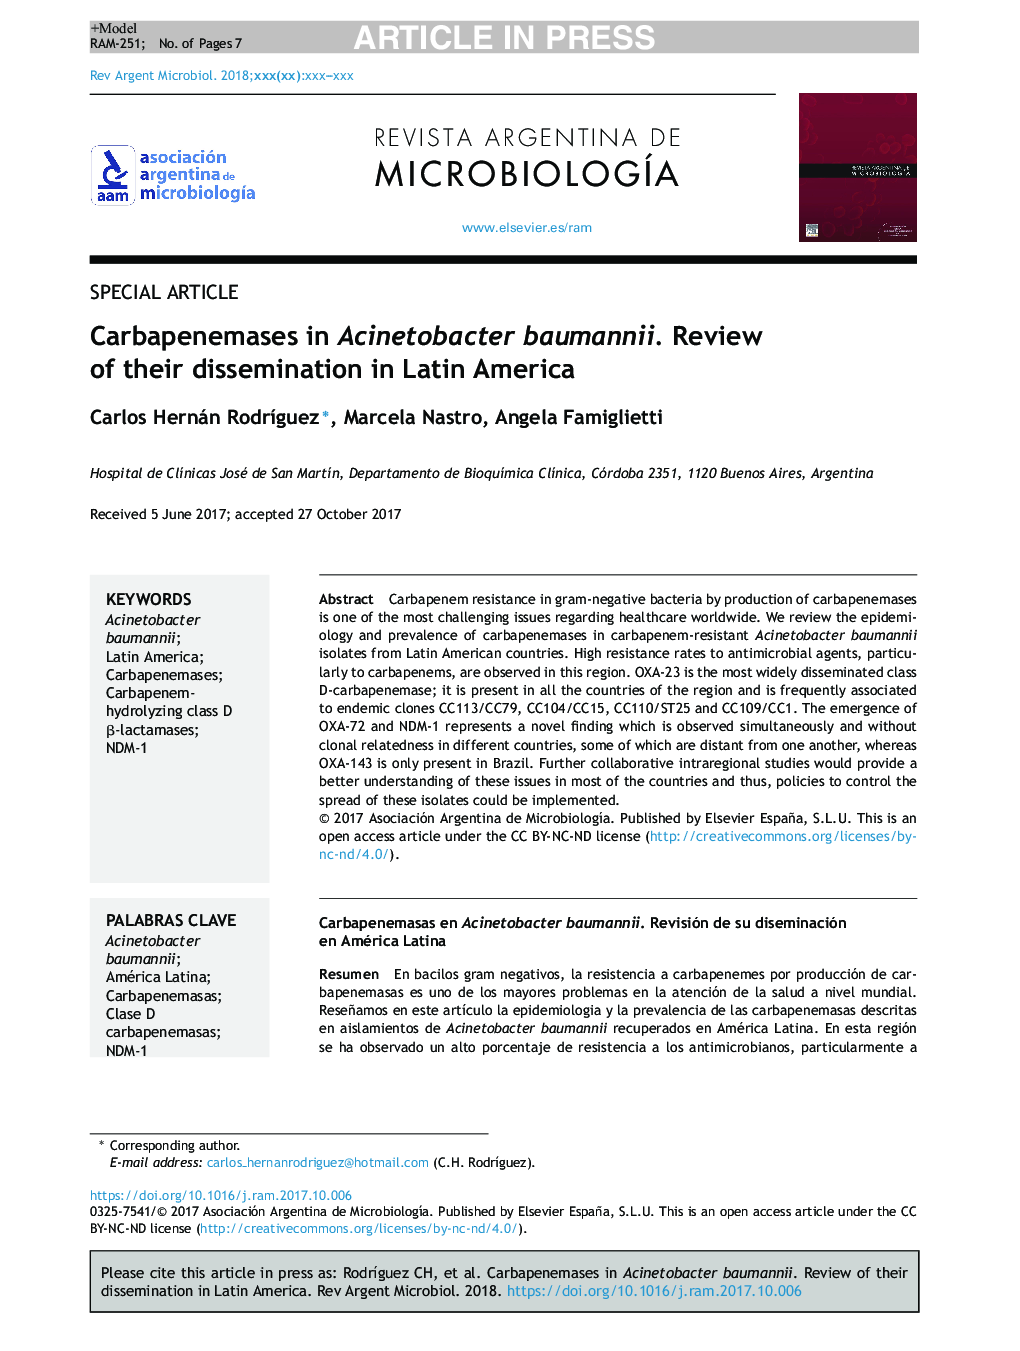 Carbapenemases in Acinetobacter baumannii. Review of their dissemination in Latin America